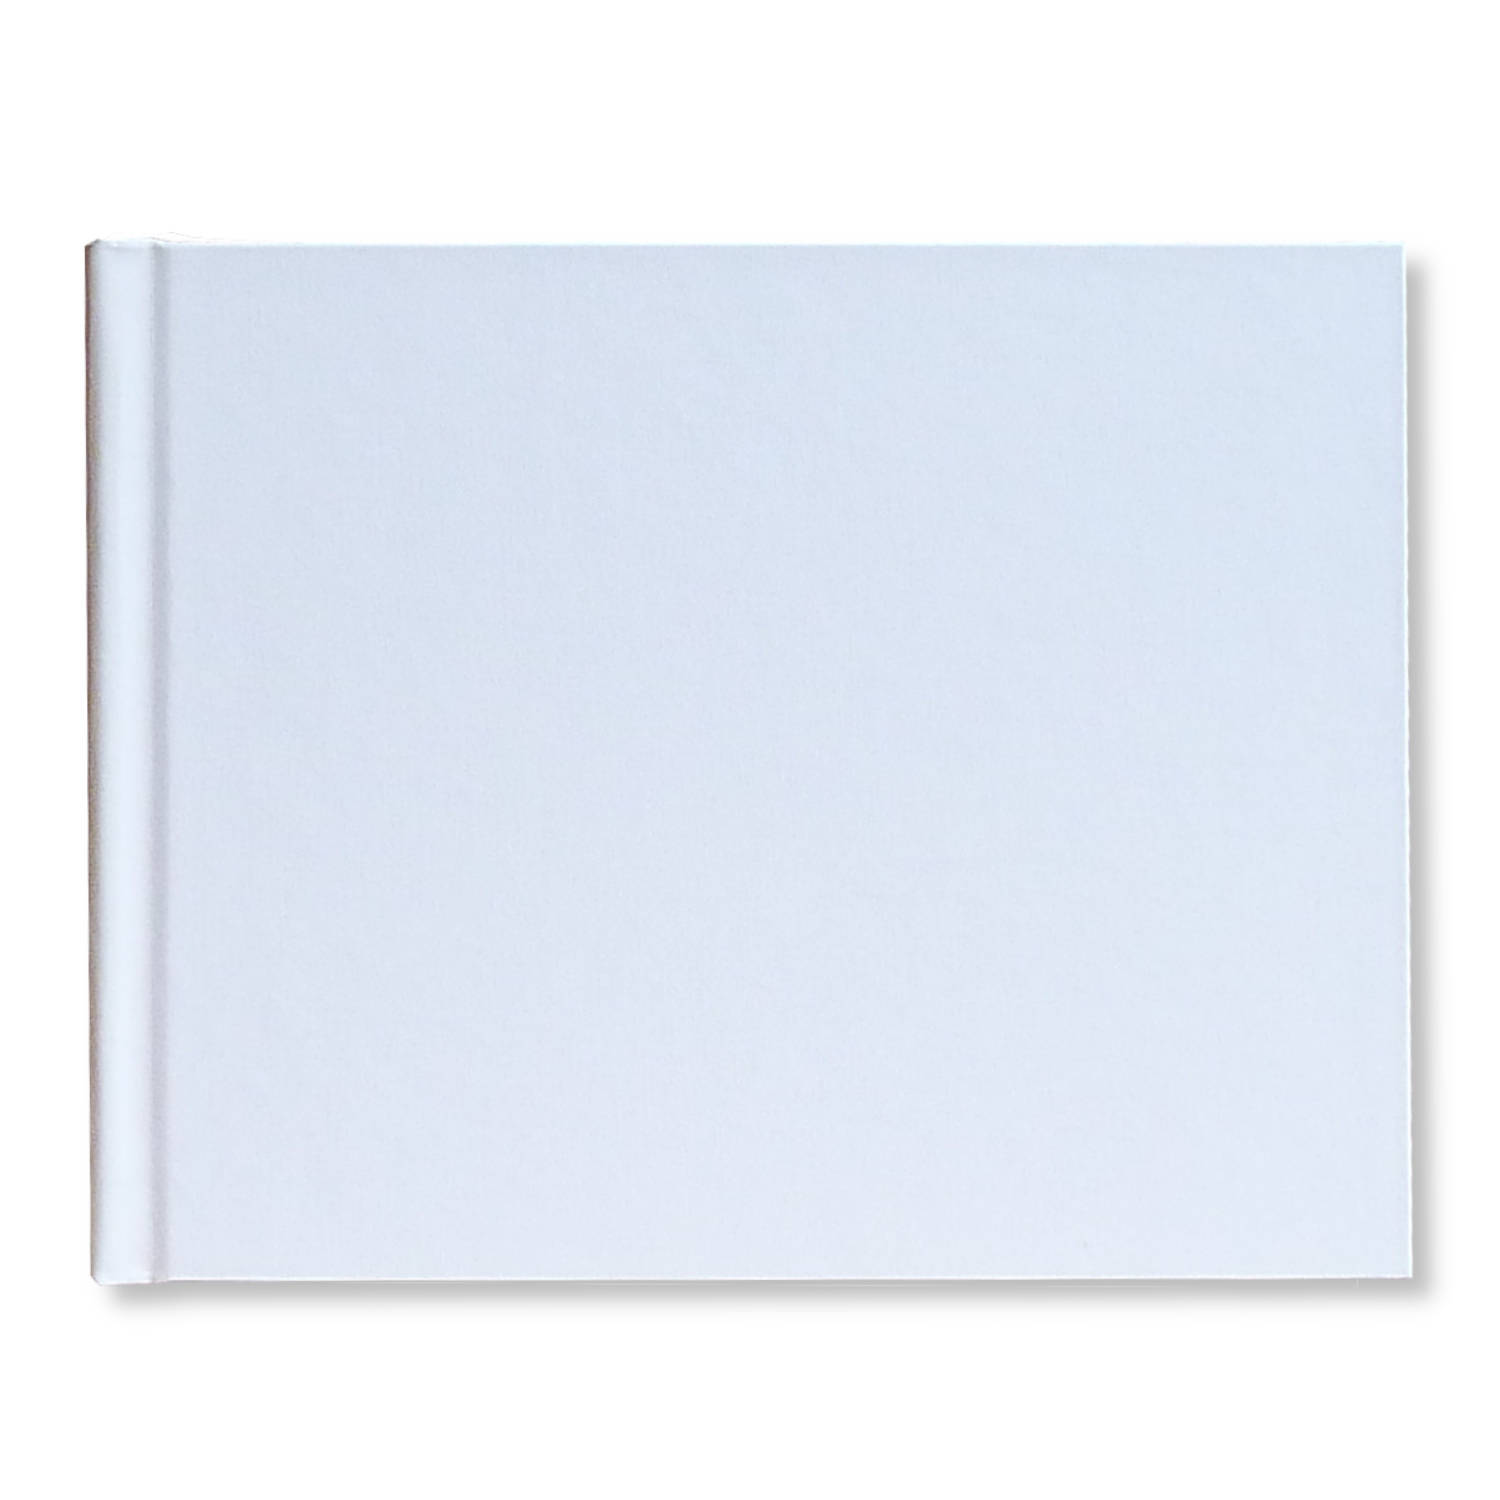 FotoHolland -Fotoalbum Buckram Classic wit 18x23 cm, witte passe-partouts, voor 8 foto's 13x18 (liggend) - FIC18238WT